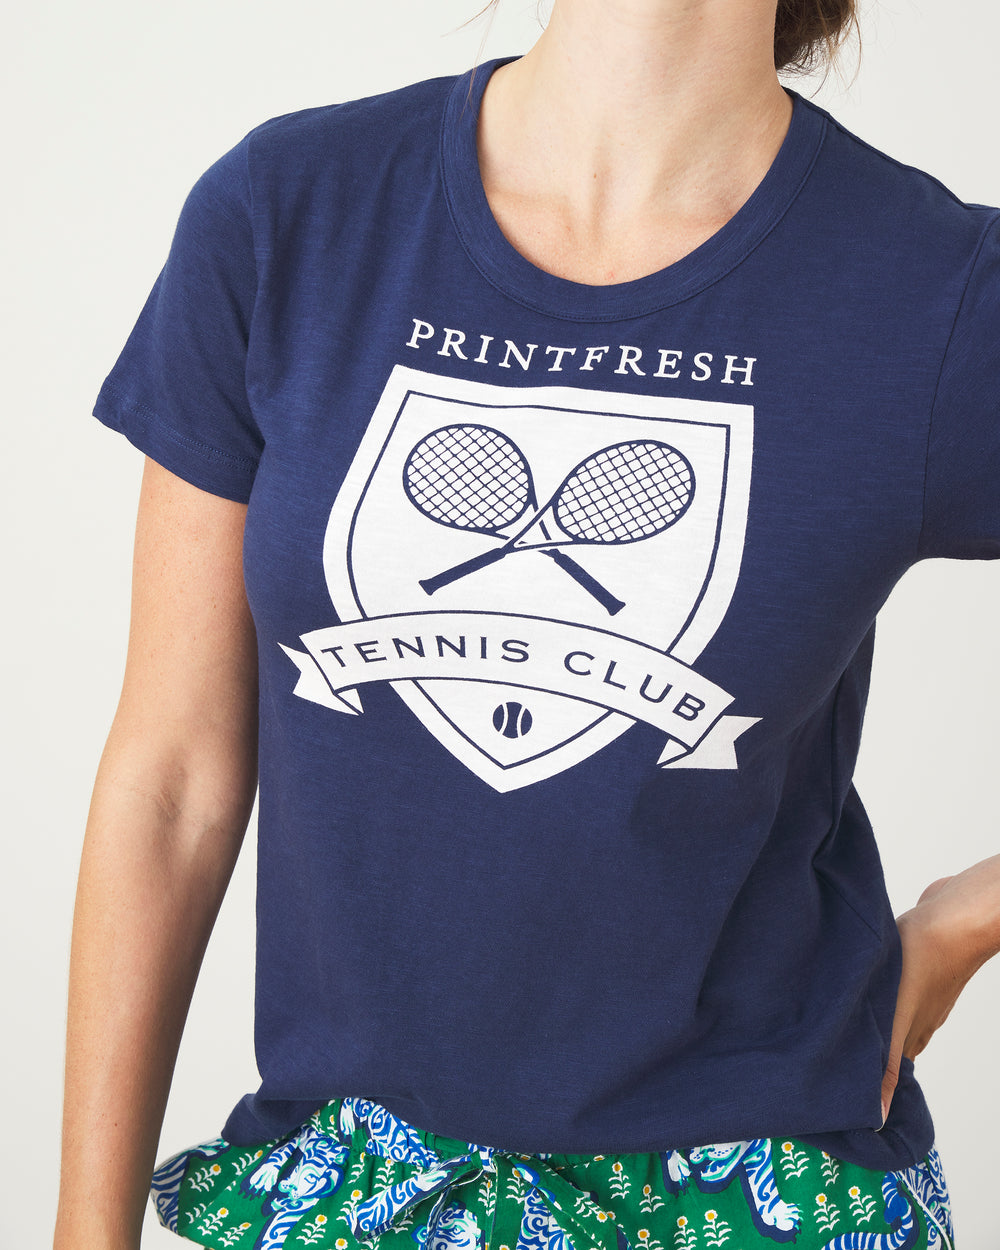 Saturday Graphic Tee - Tennis Club - Navy - Printfresh